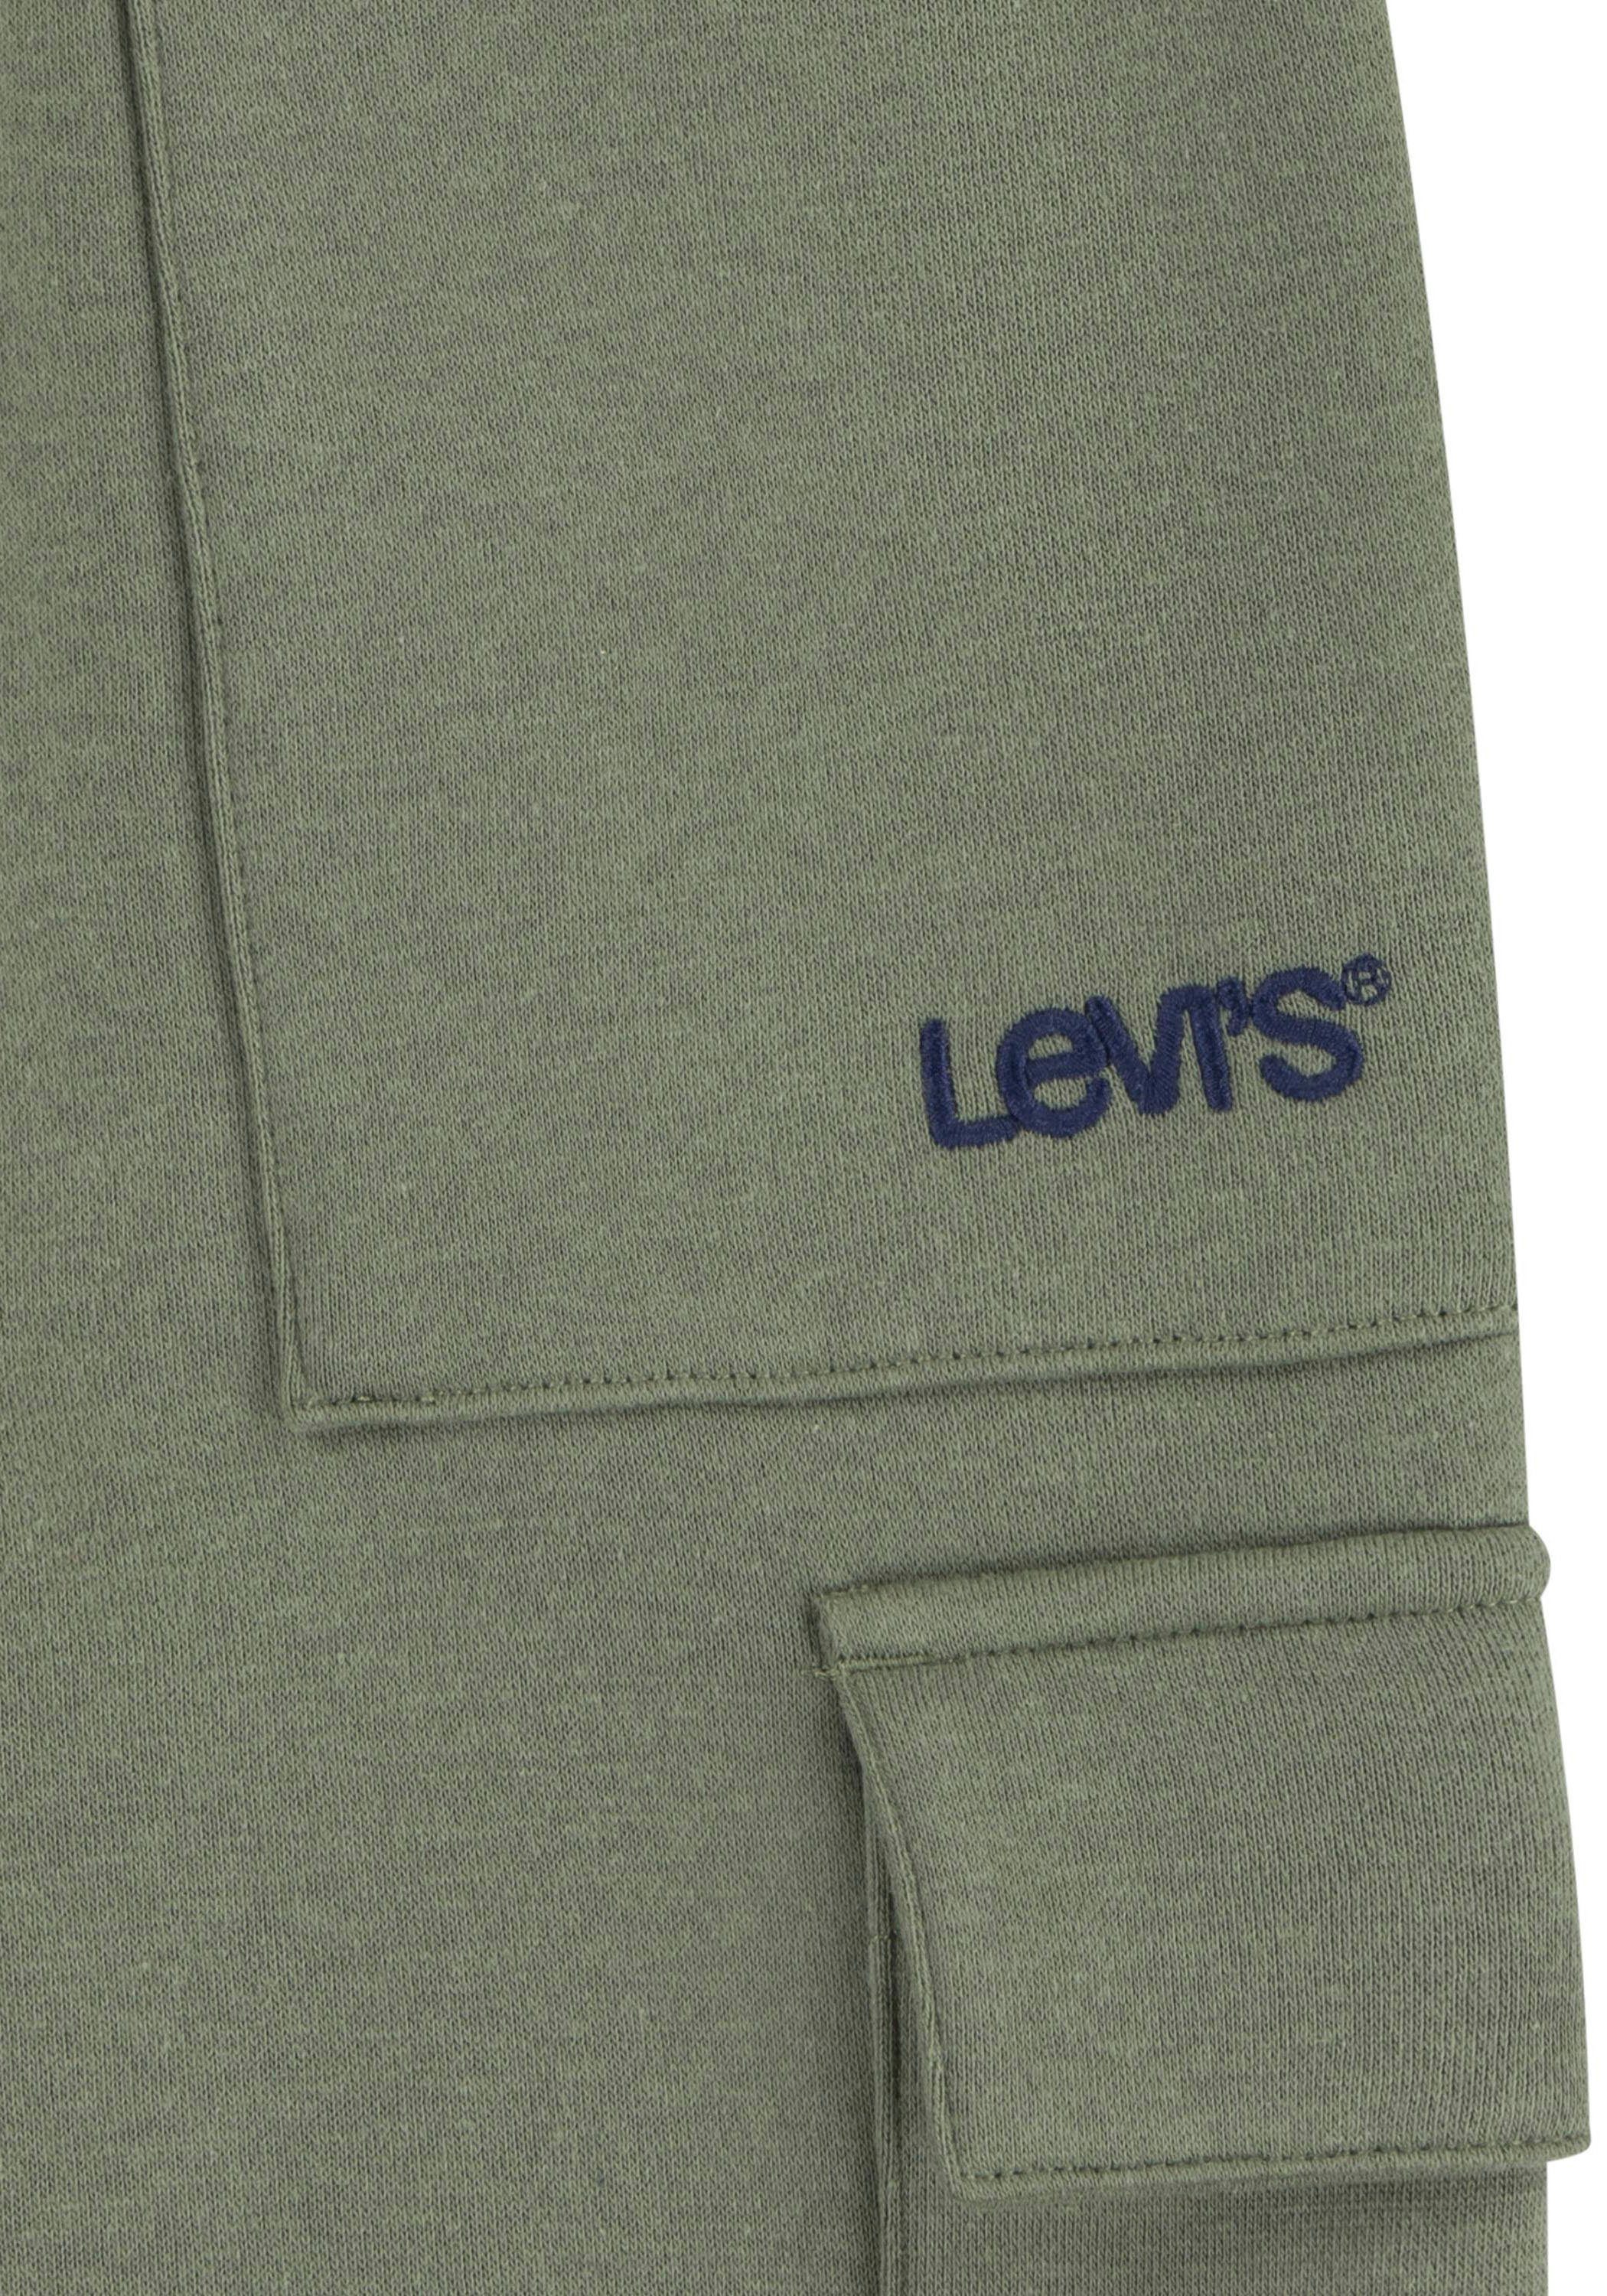 Jogger BOYS for Kids Cargo Levi's® Sweatpants Utility